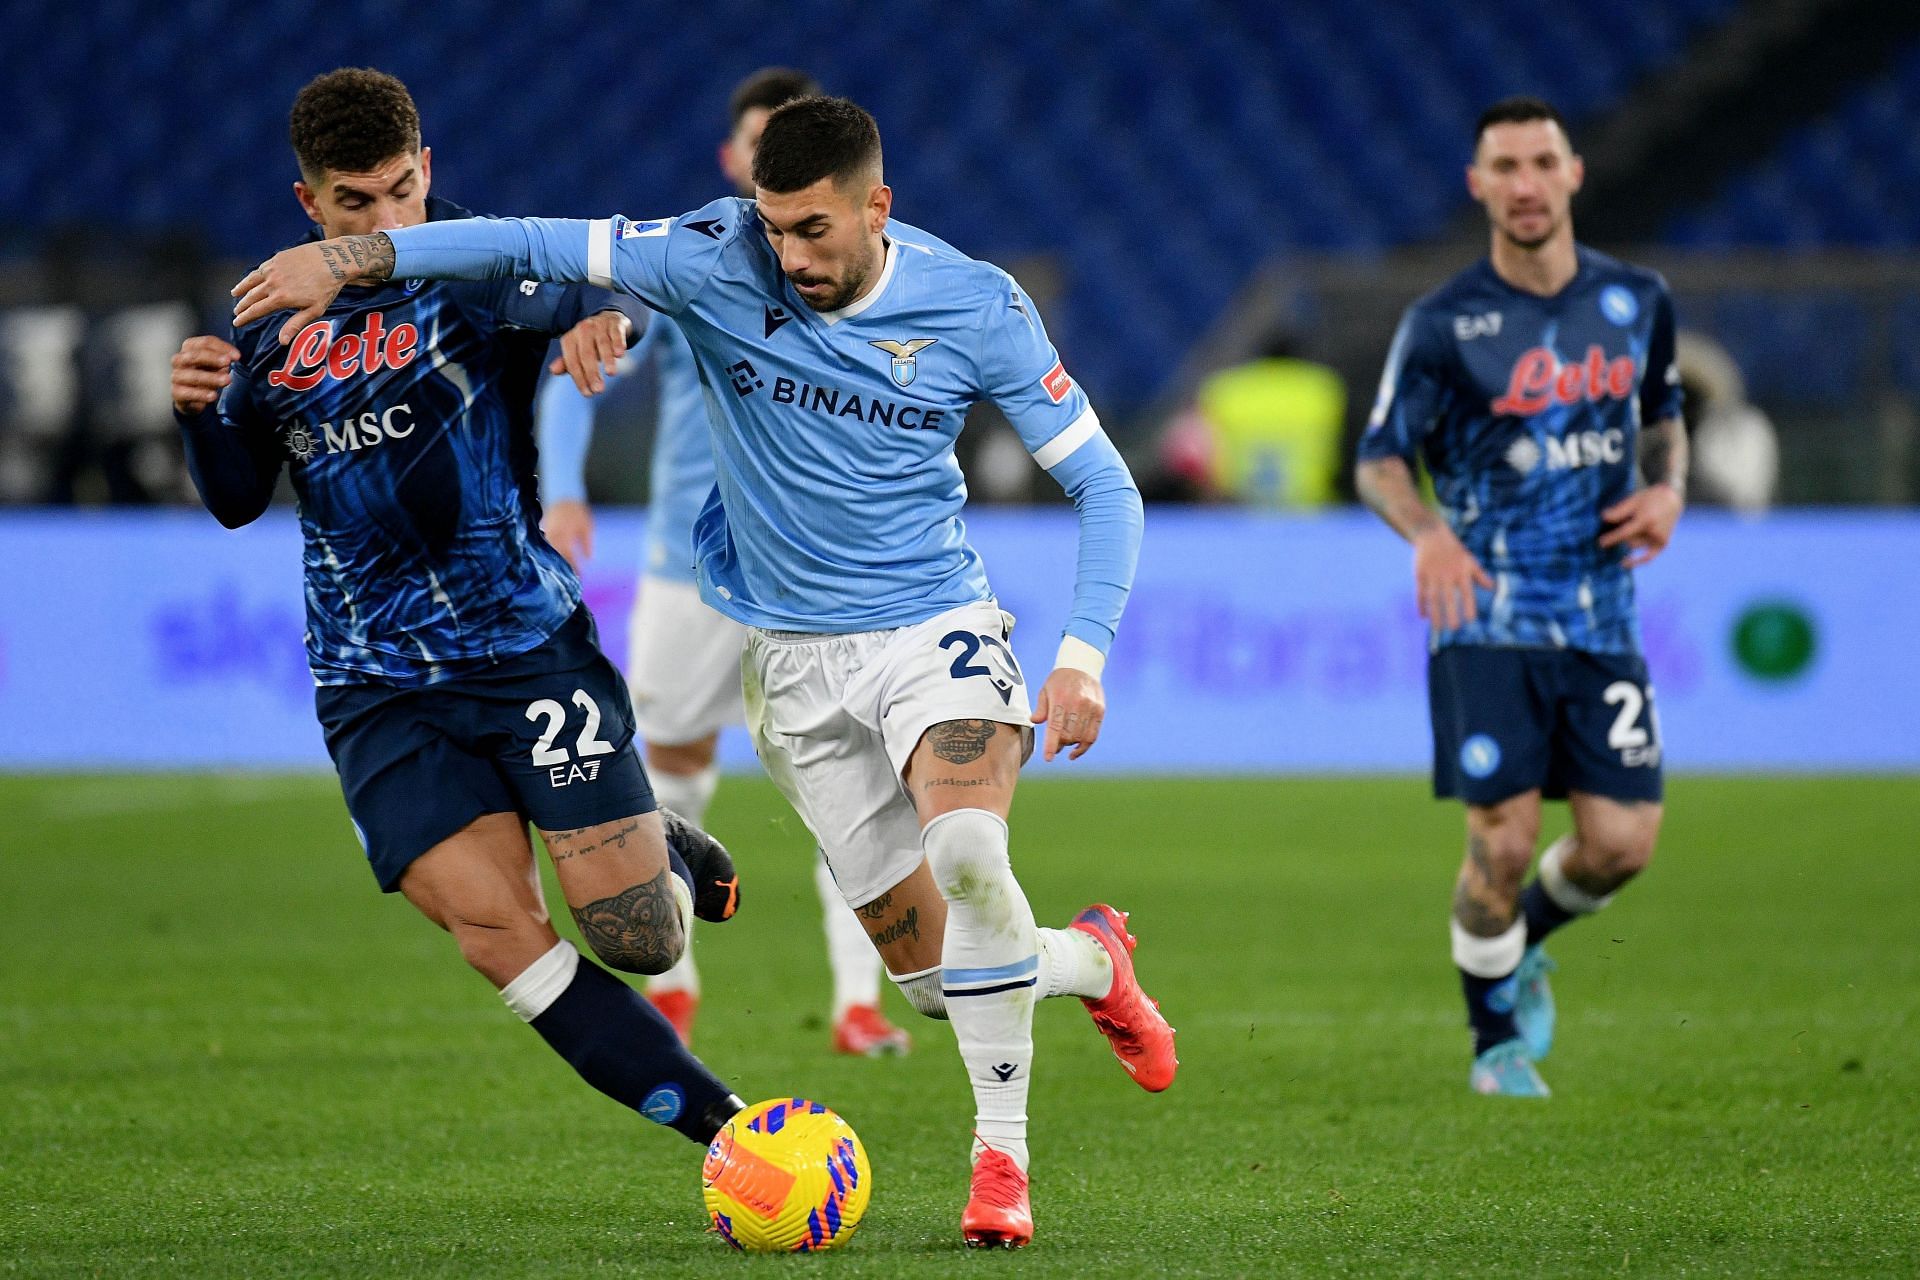 Giovanni Di Lorenzo has been a consistent performer for Napoli